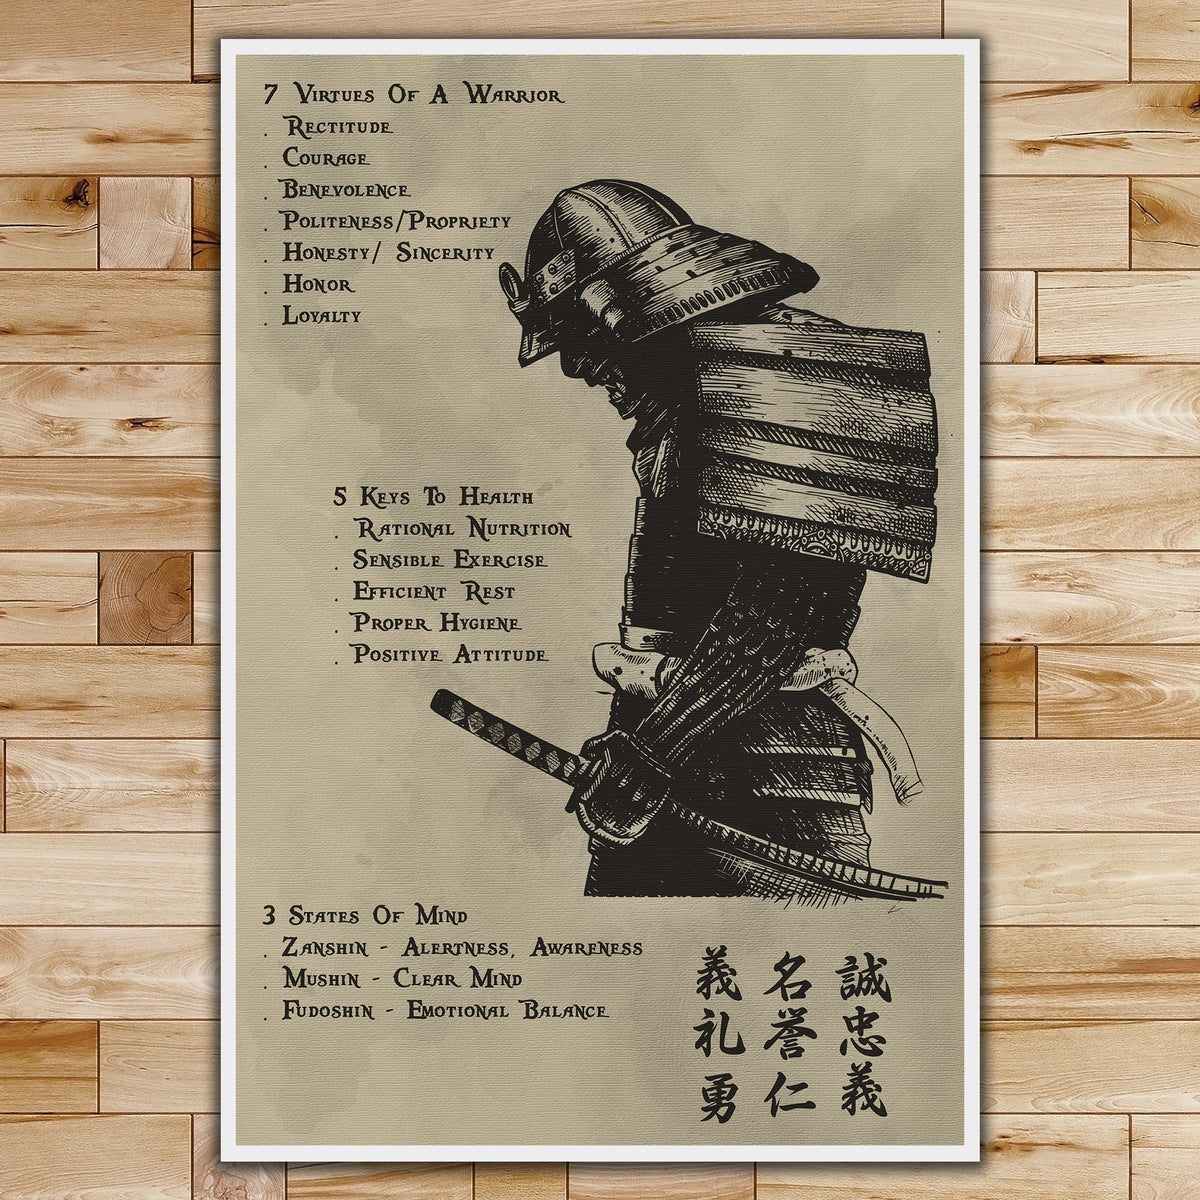 SA021 + SA083 - 7 5 3 CODE - Quitting Is Not - Home Decoration - Samurai Poster